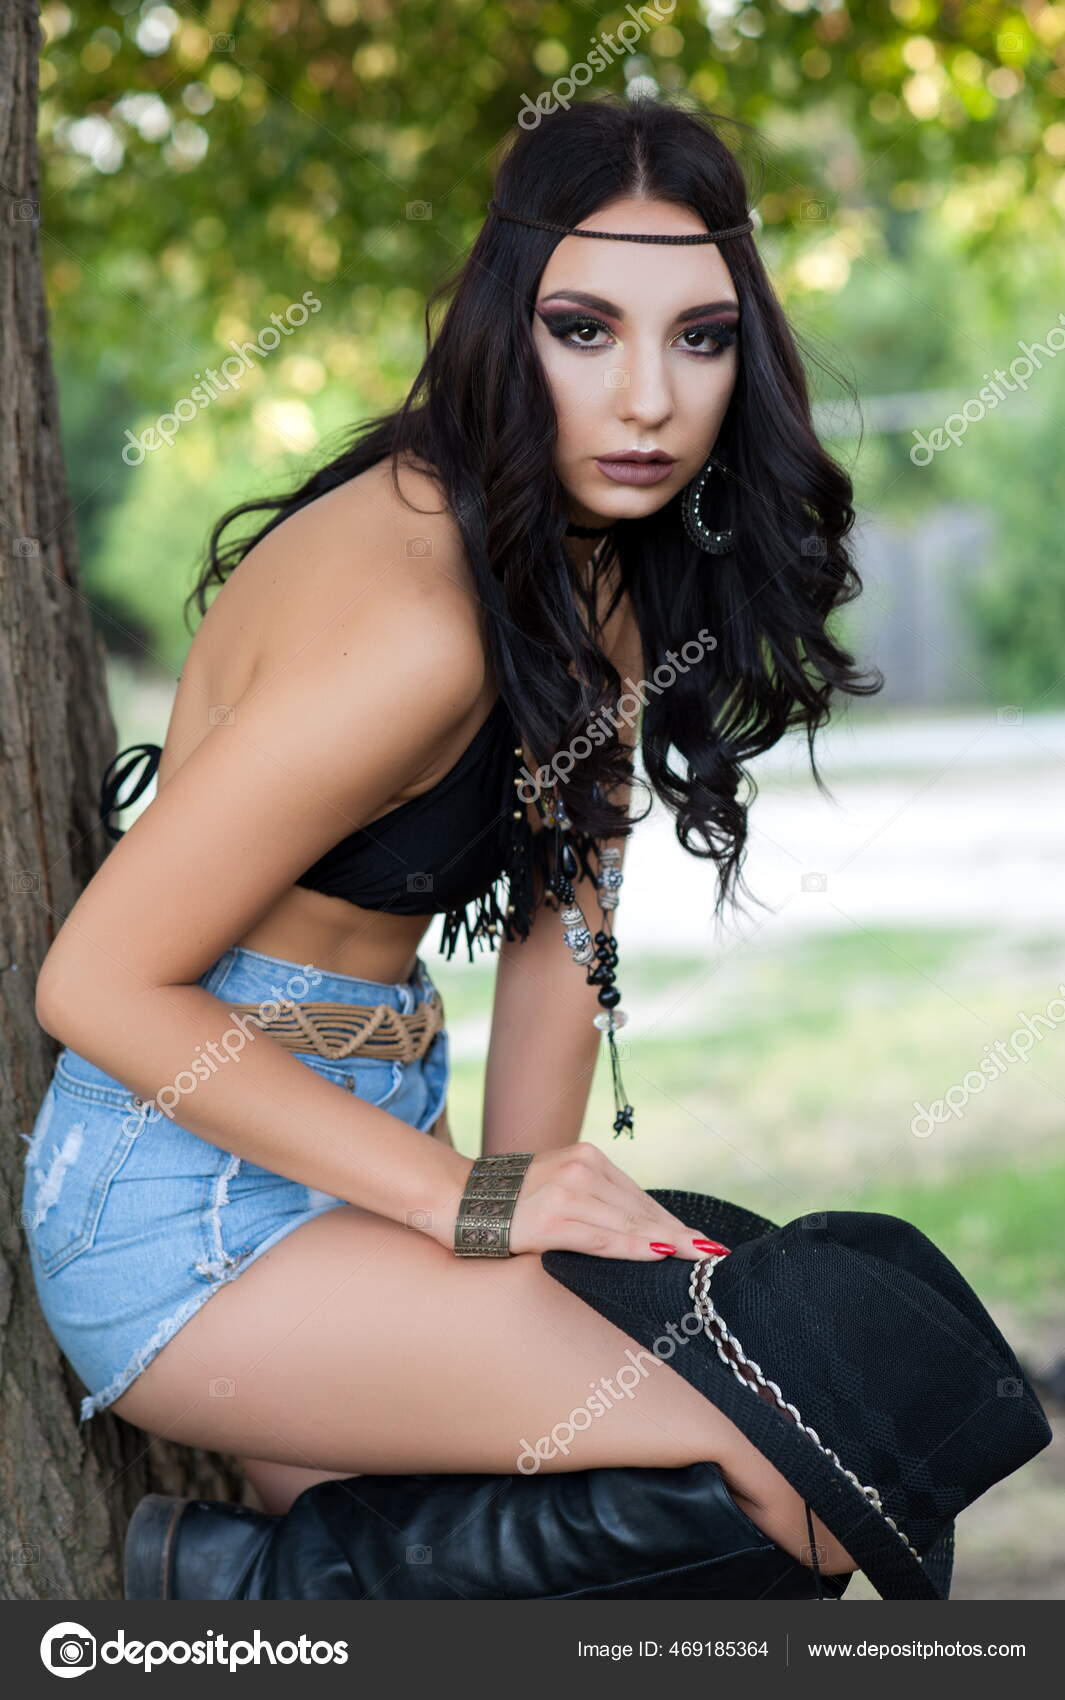 https://st2.depositphotos.com/1012146/46918/i/1600/depositphotos_469185364-stock-photo-beautiful-sexy-brunette-girl-dressed.jpg